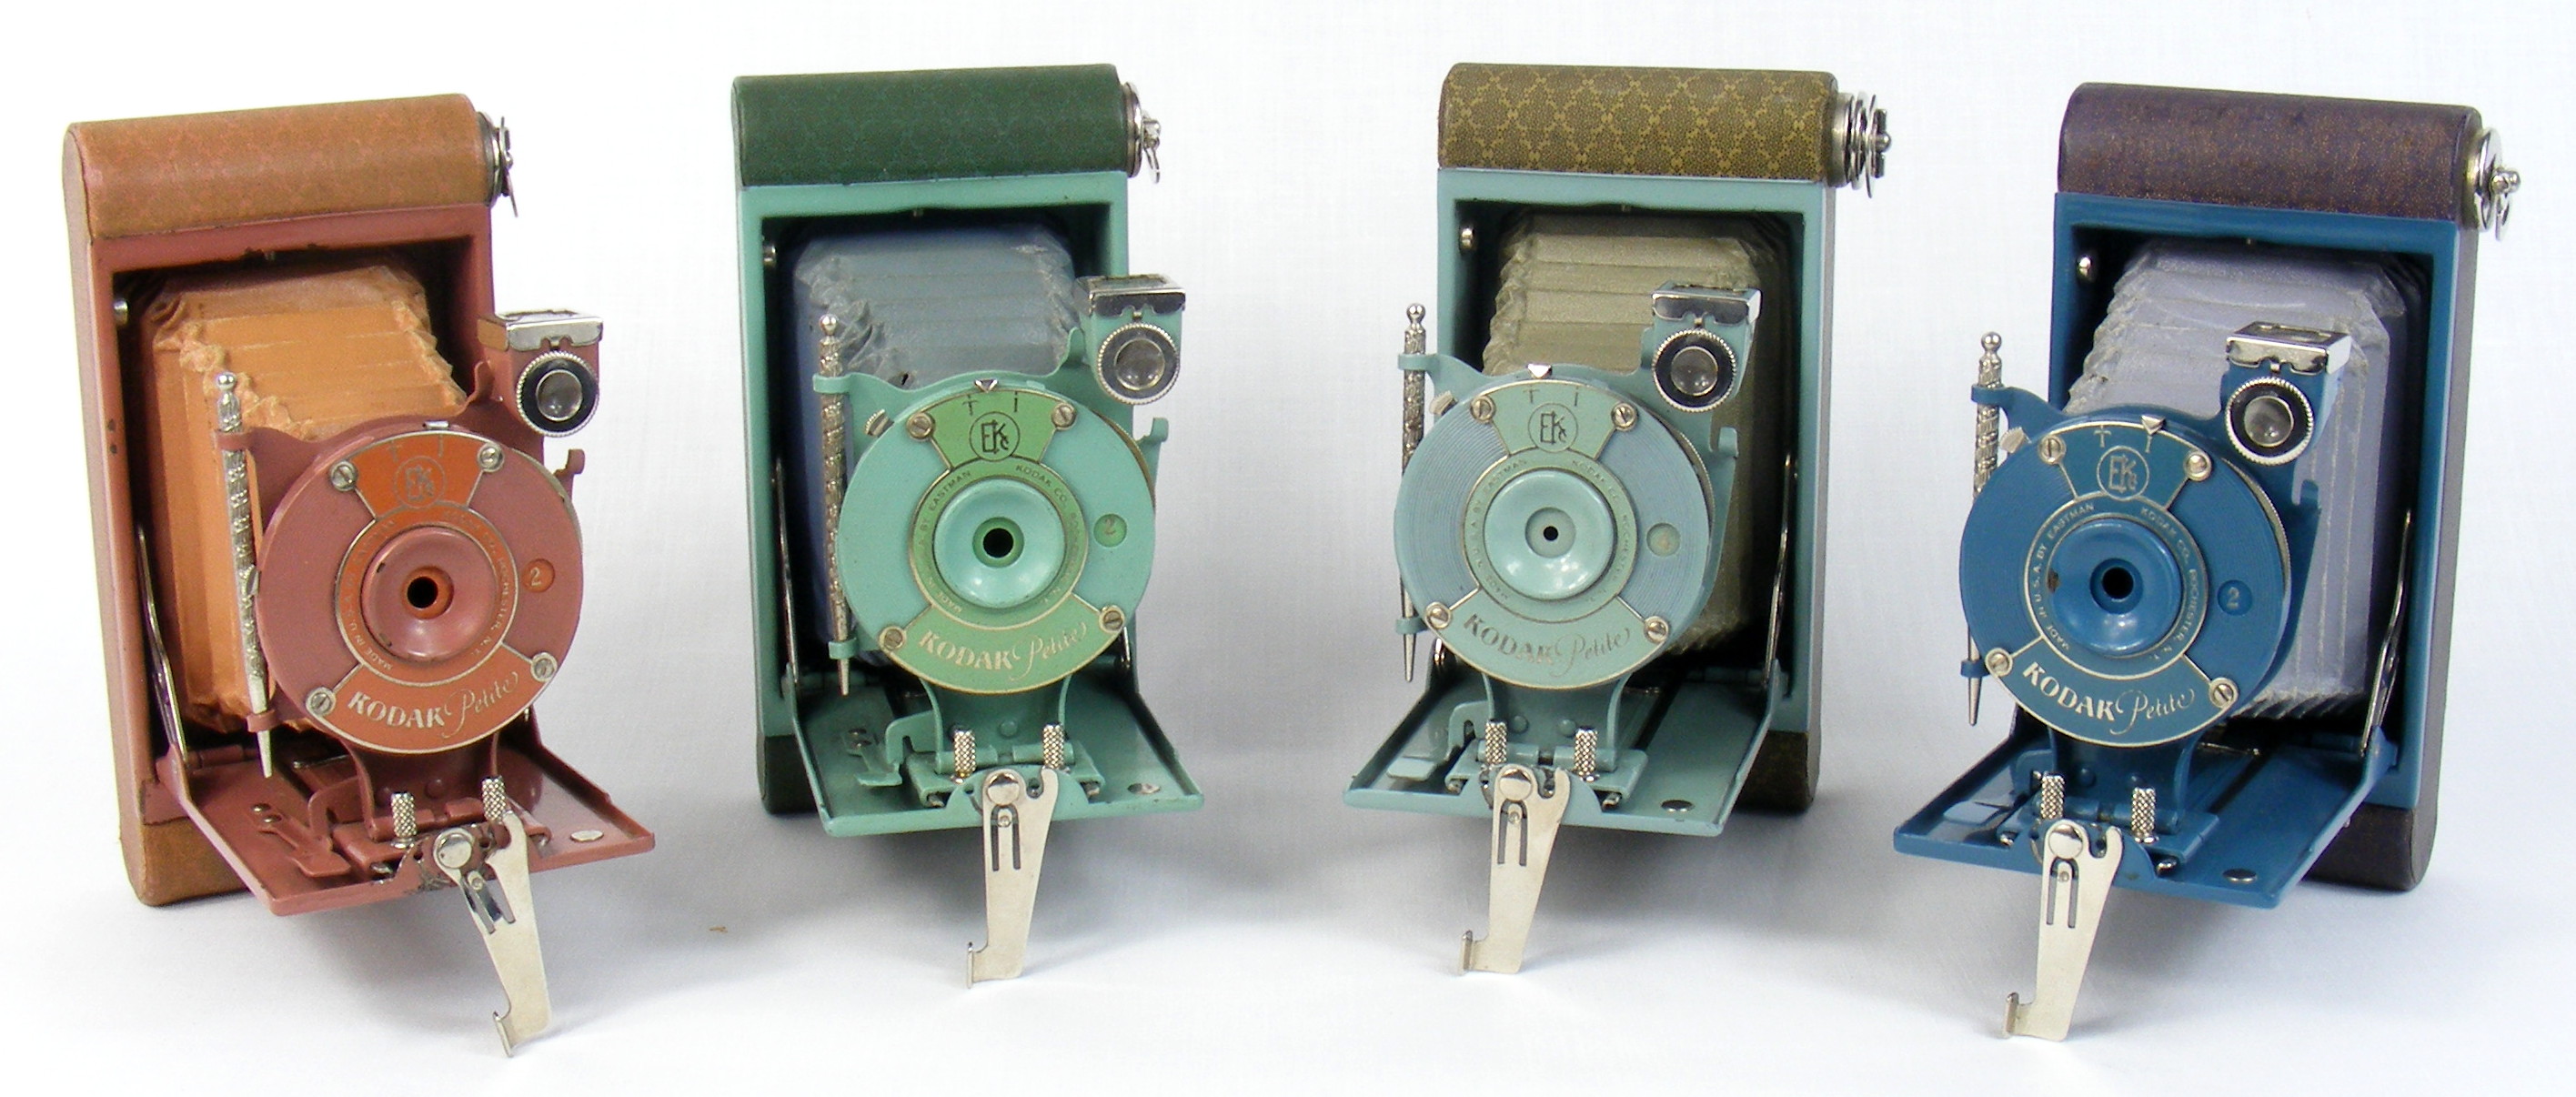 Image of collection of Kodak Petite folding cameras